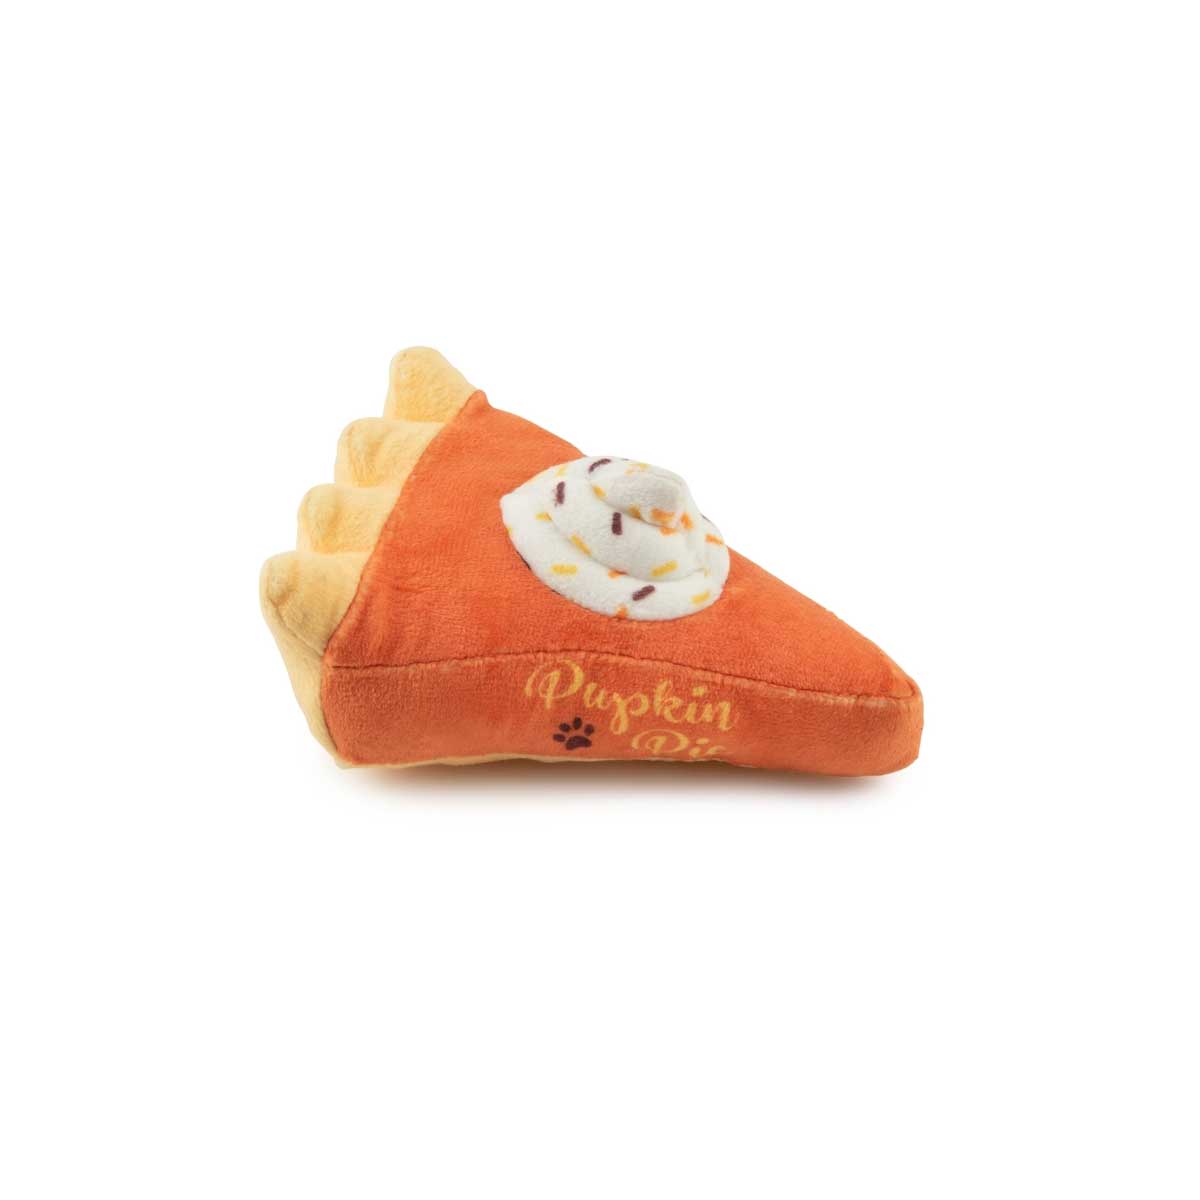 Pupkin Pie Slice Plush Dog Toy | Pawlicious & Company